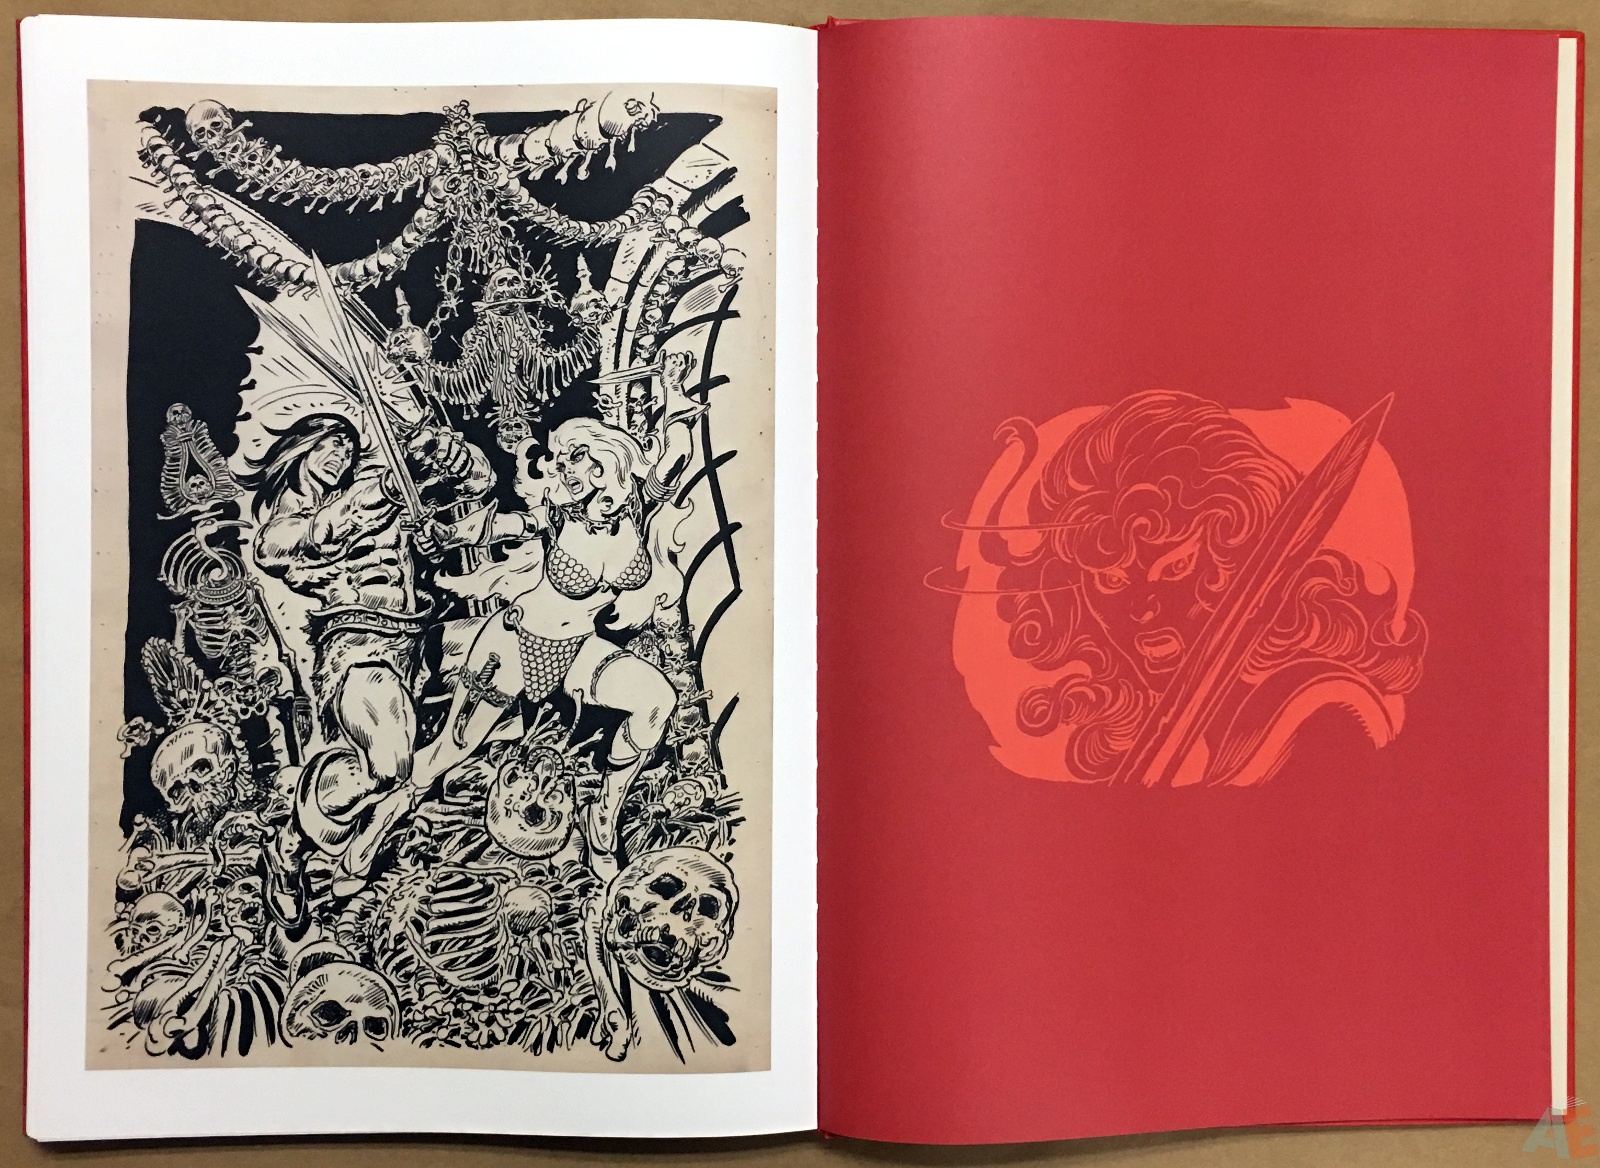 Frank Thorne's Red Sonja Art Edition Volume 1